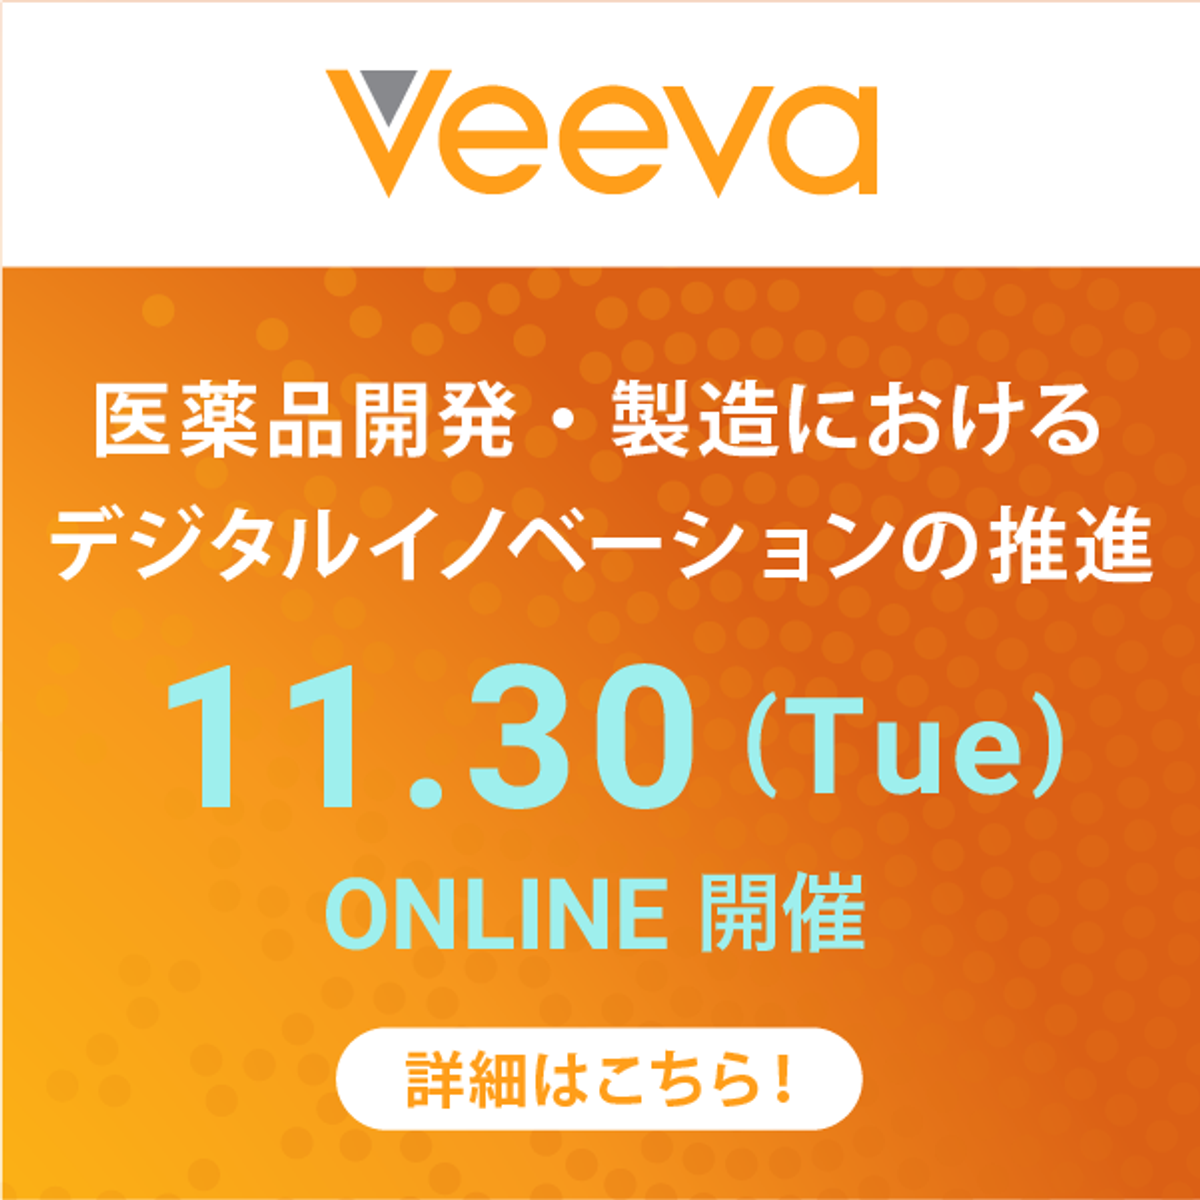 Veeva R&D and Quality Summit Connect Japanをオンラインにて11/30に開催 NEWSCAST